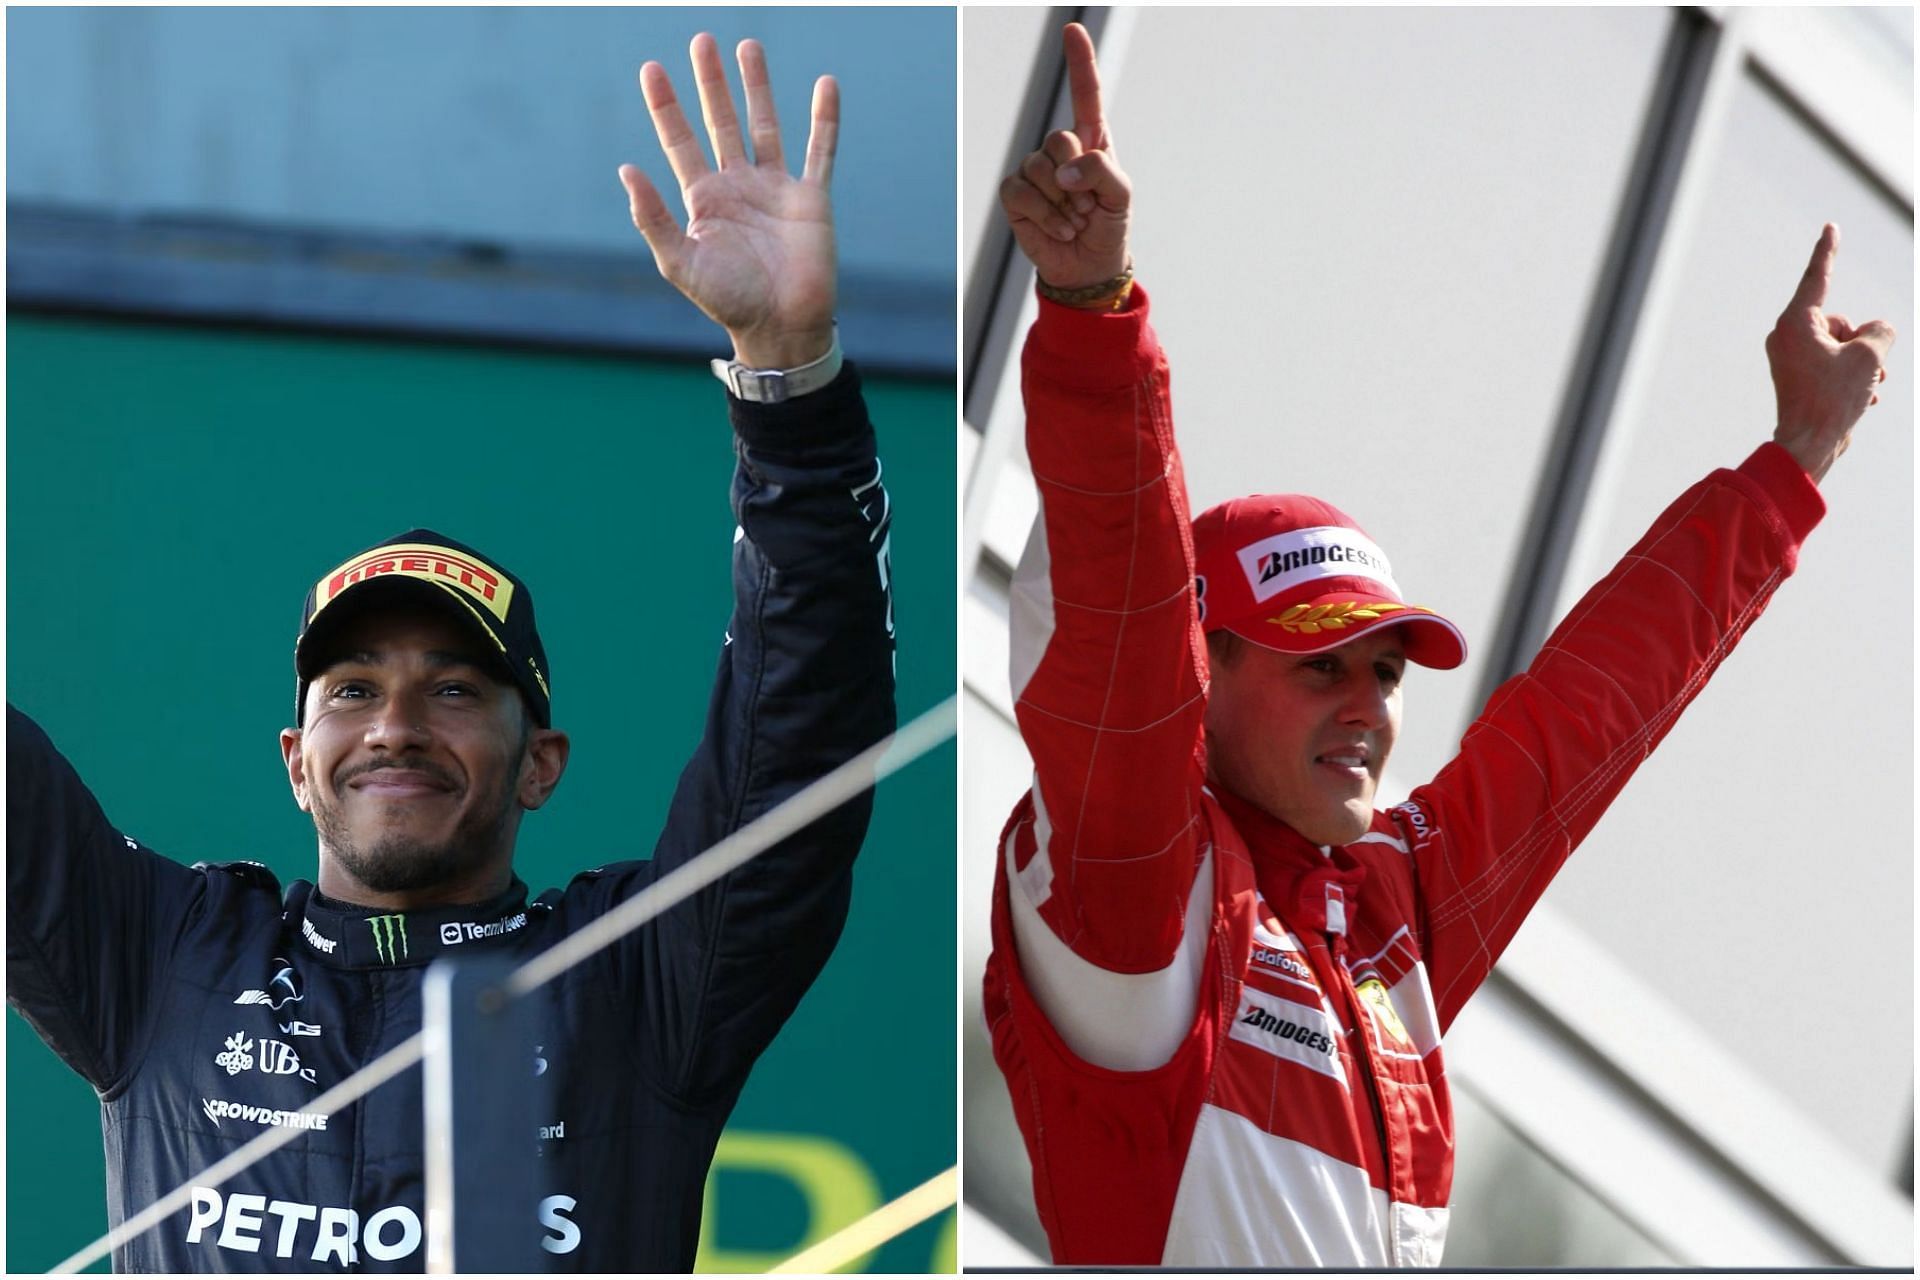 Lewis Hamilton (L) and Michael Schumacher (R) (Collage via Sportskeeda)